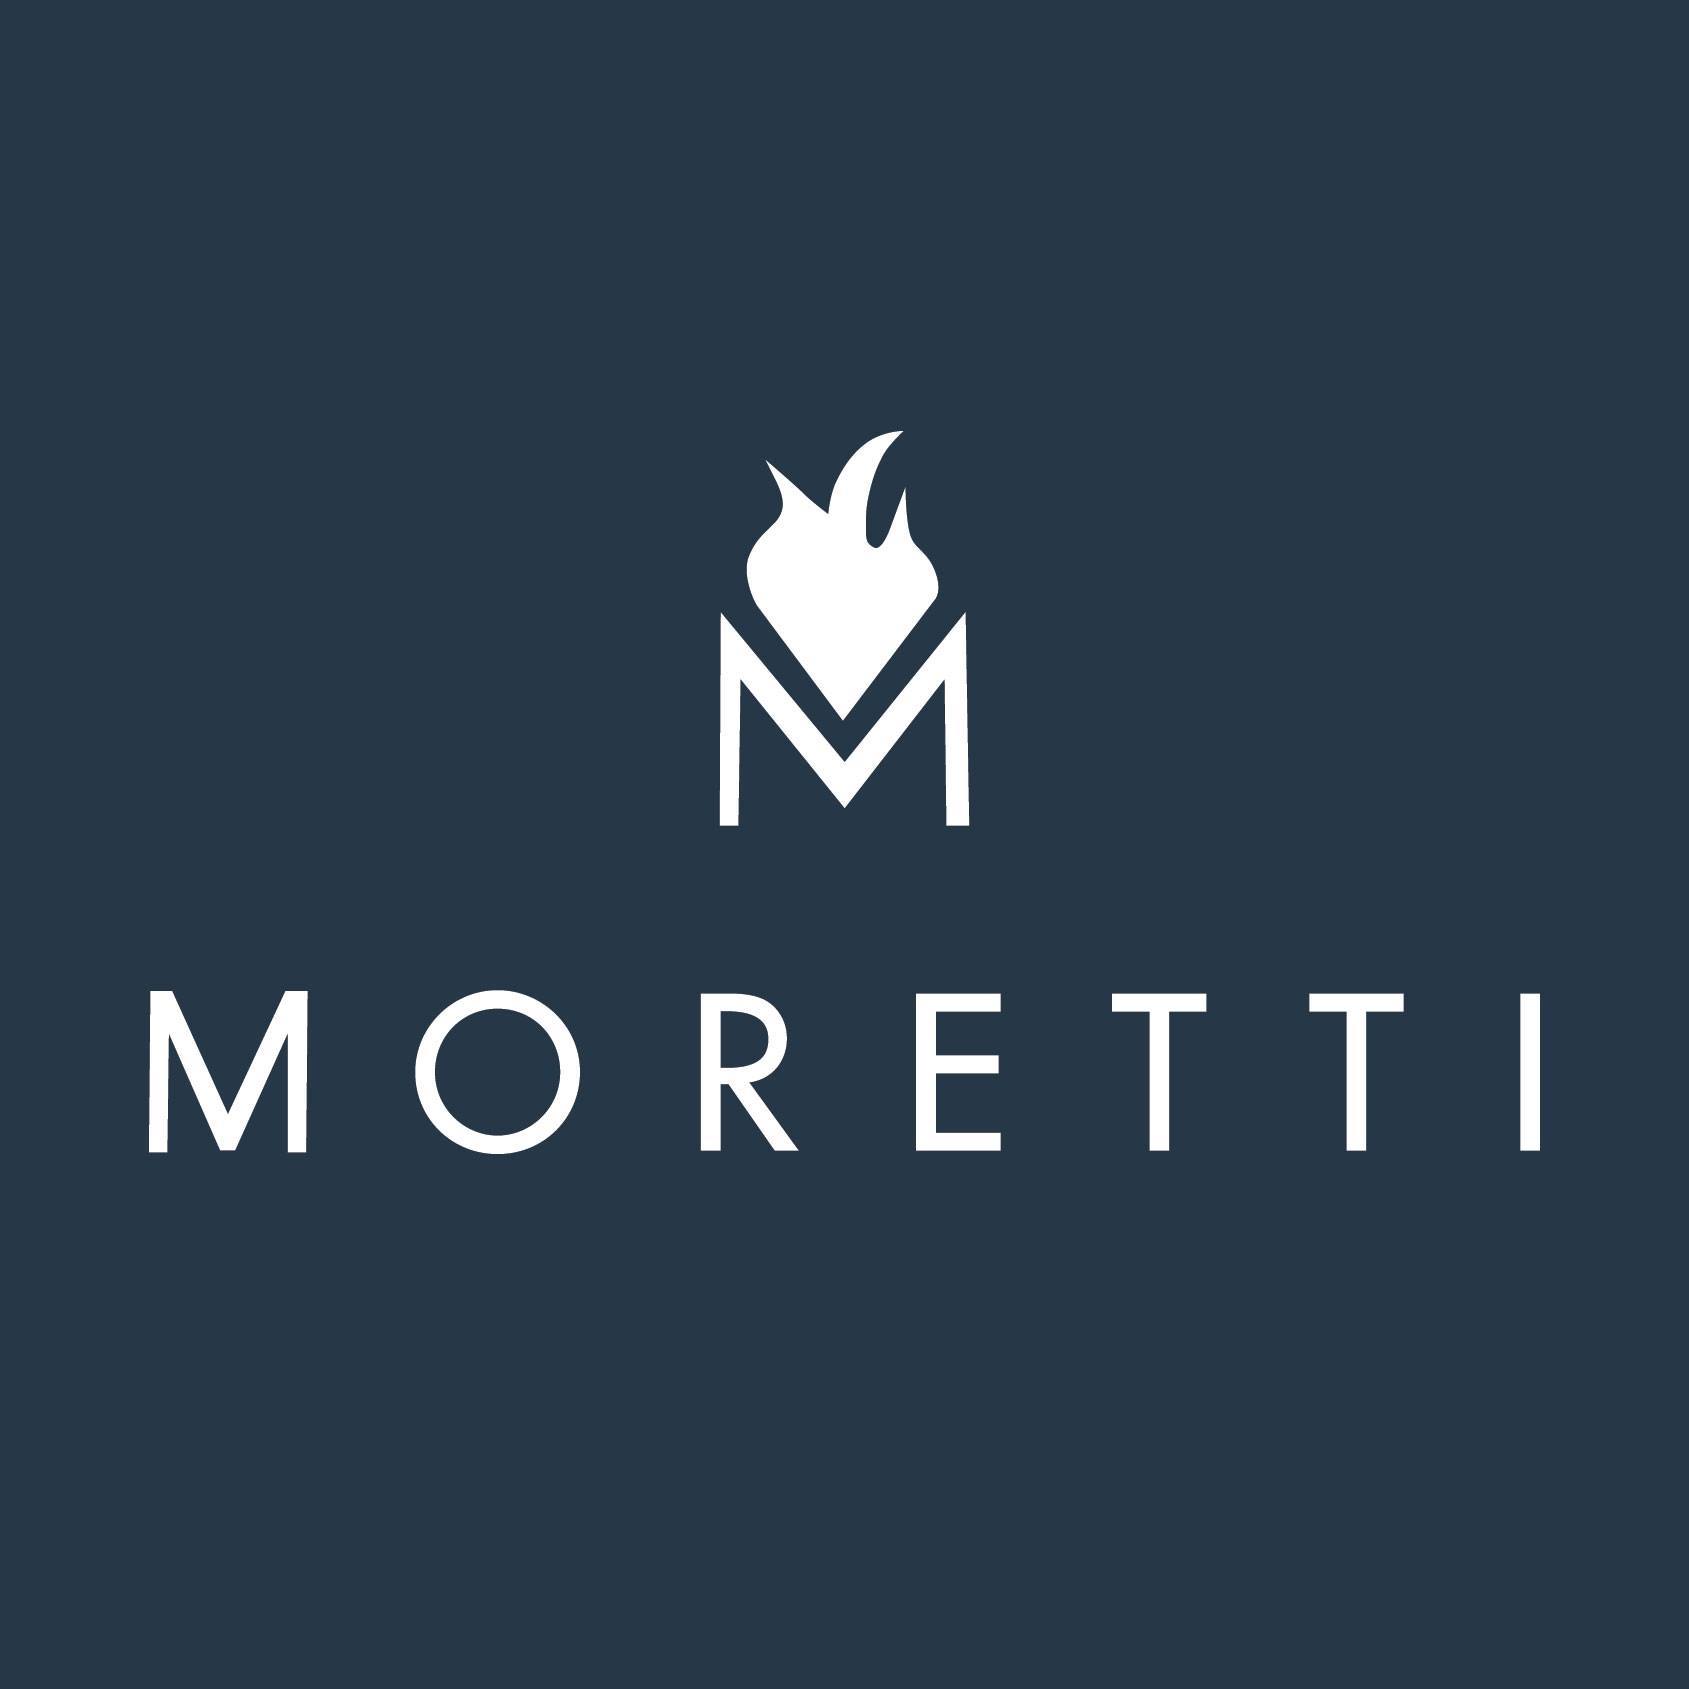 Business logo of Moretti